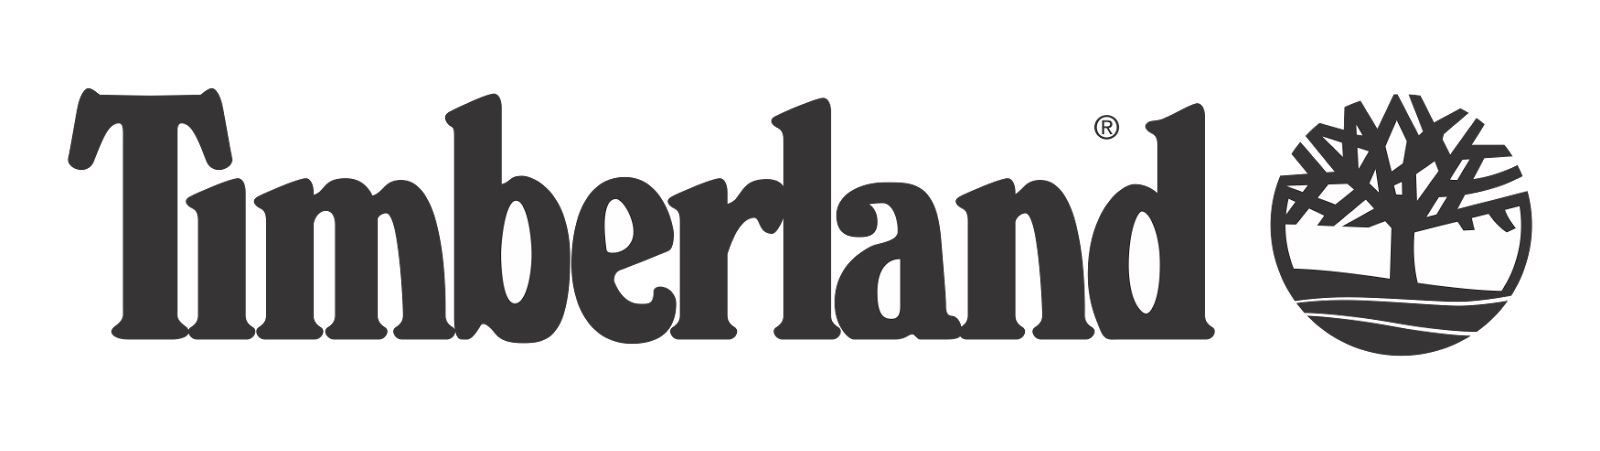 Timberland-vector-logo.png